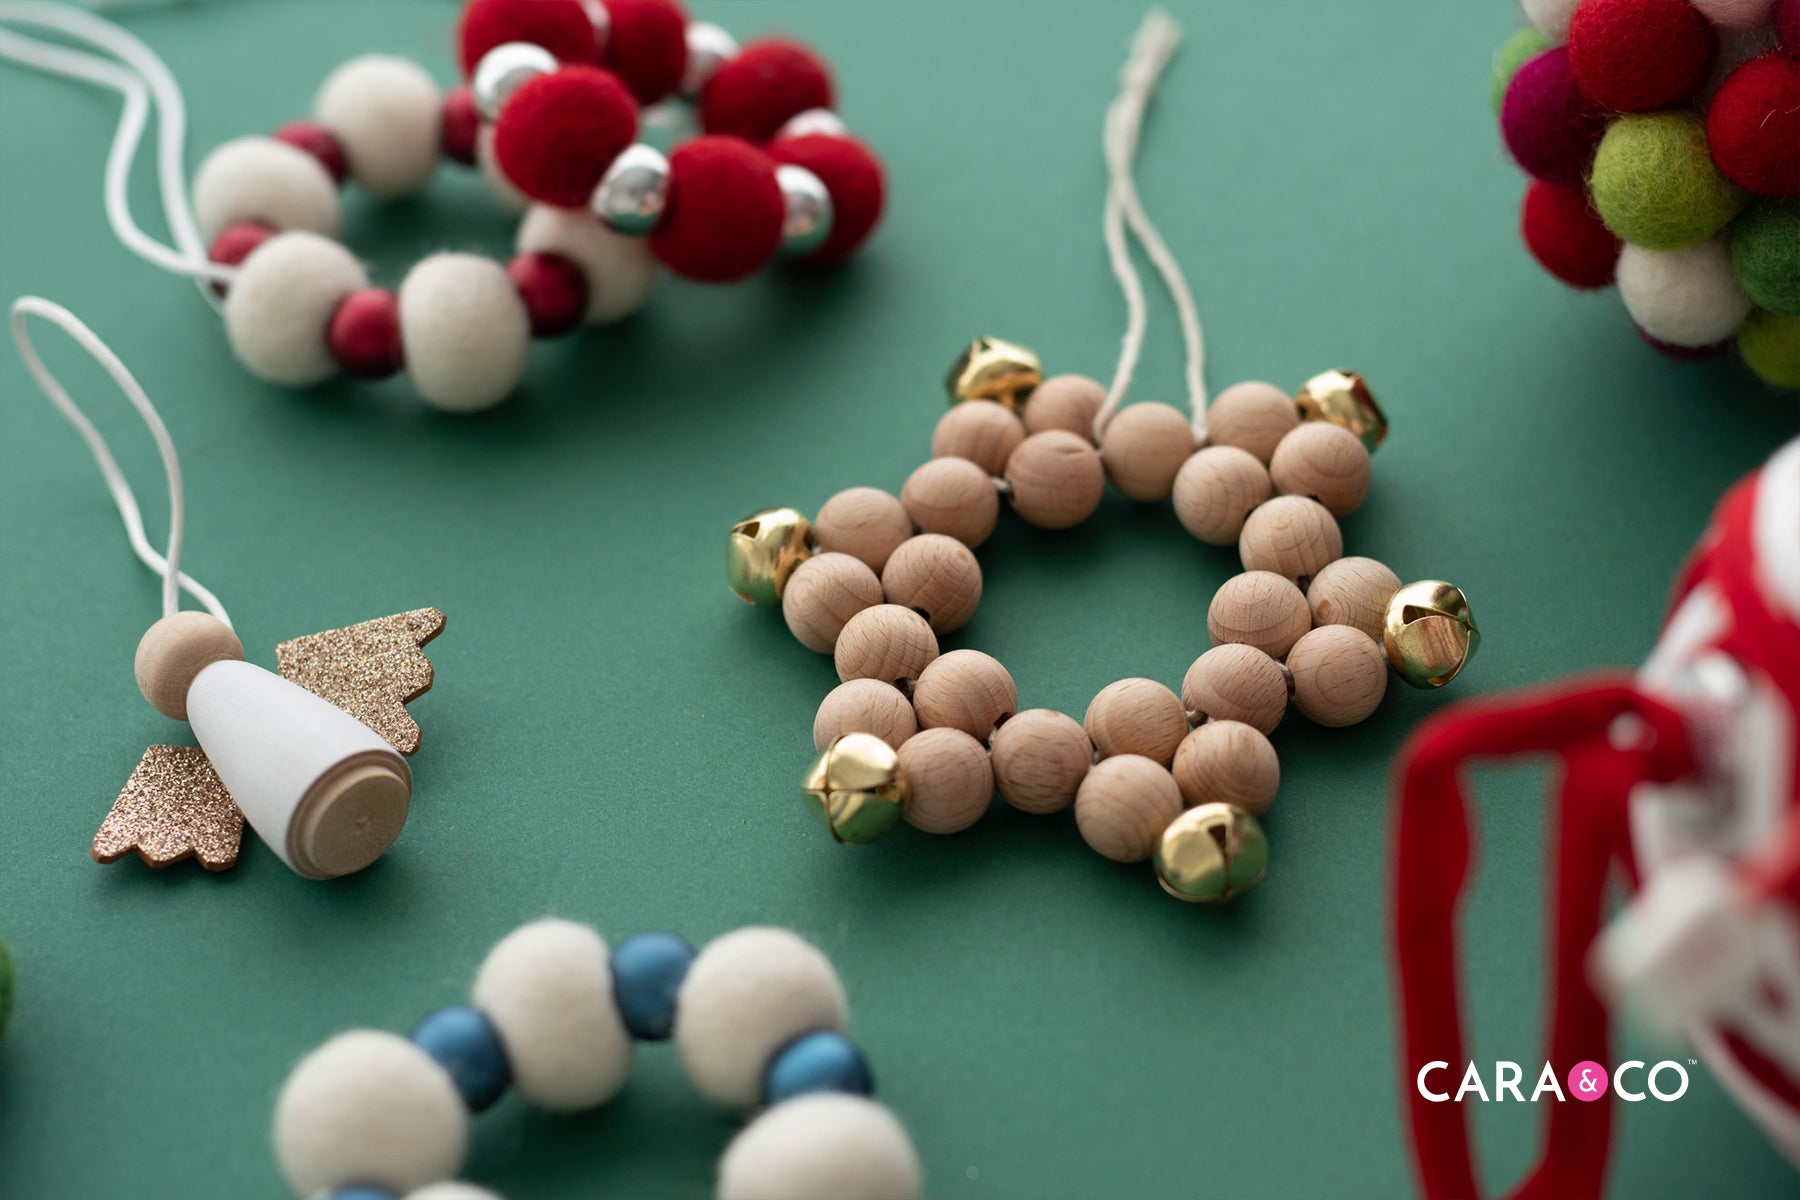 DIY Christmas Ornaments - Cara & Co Tutorials